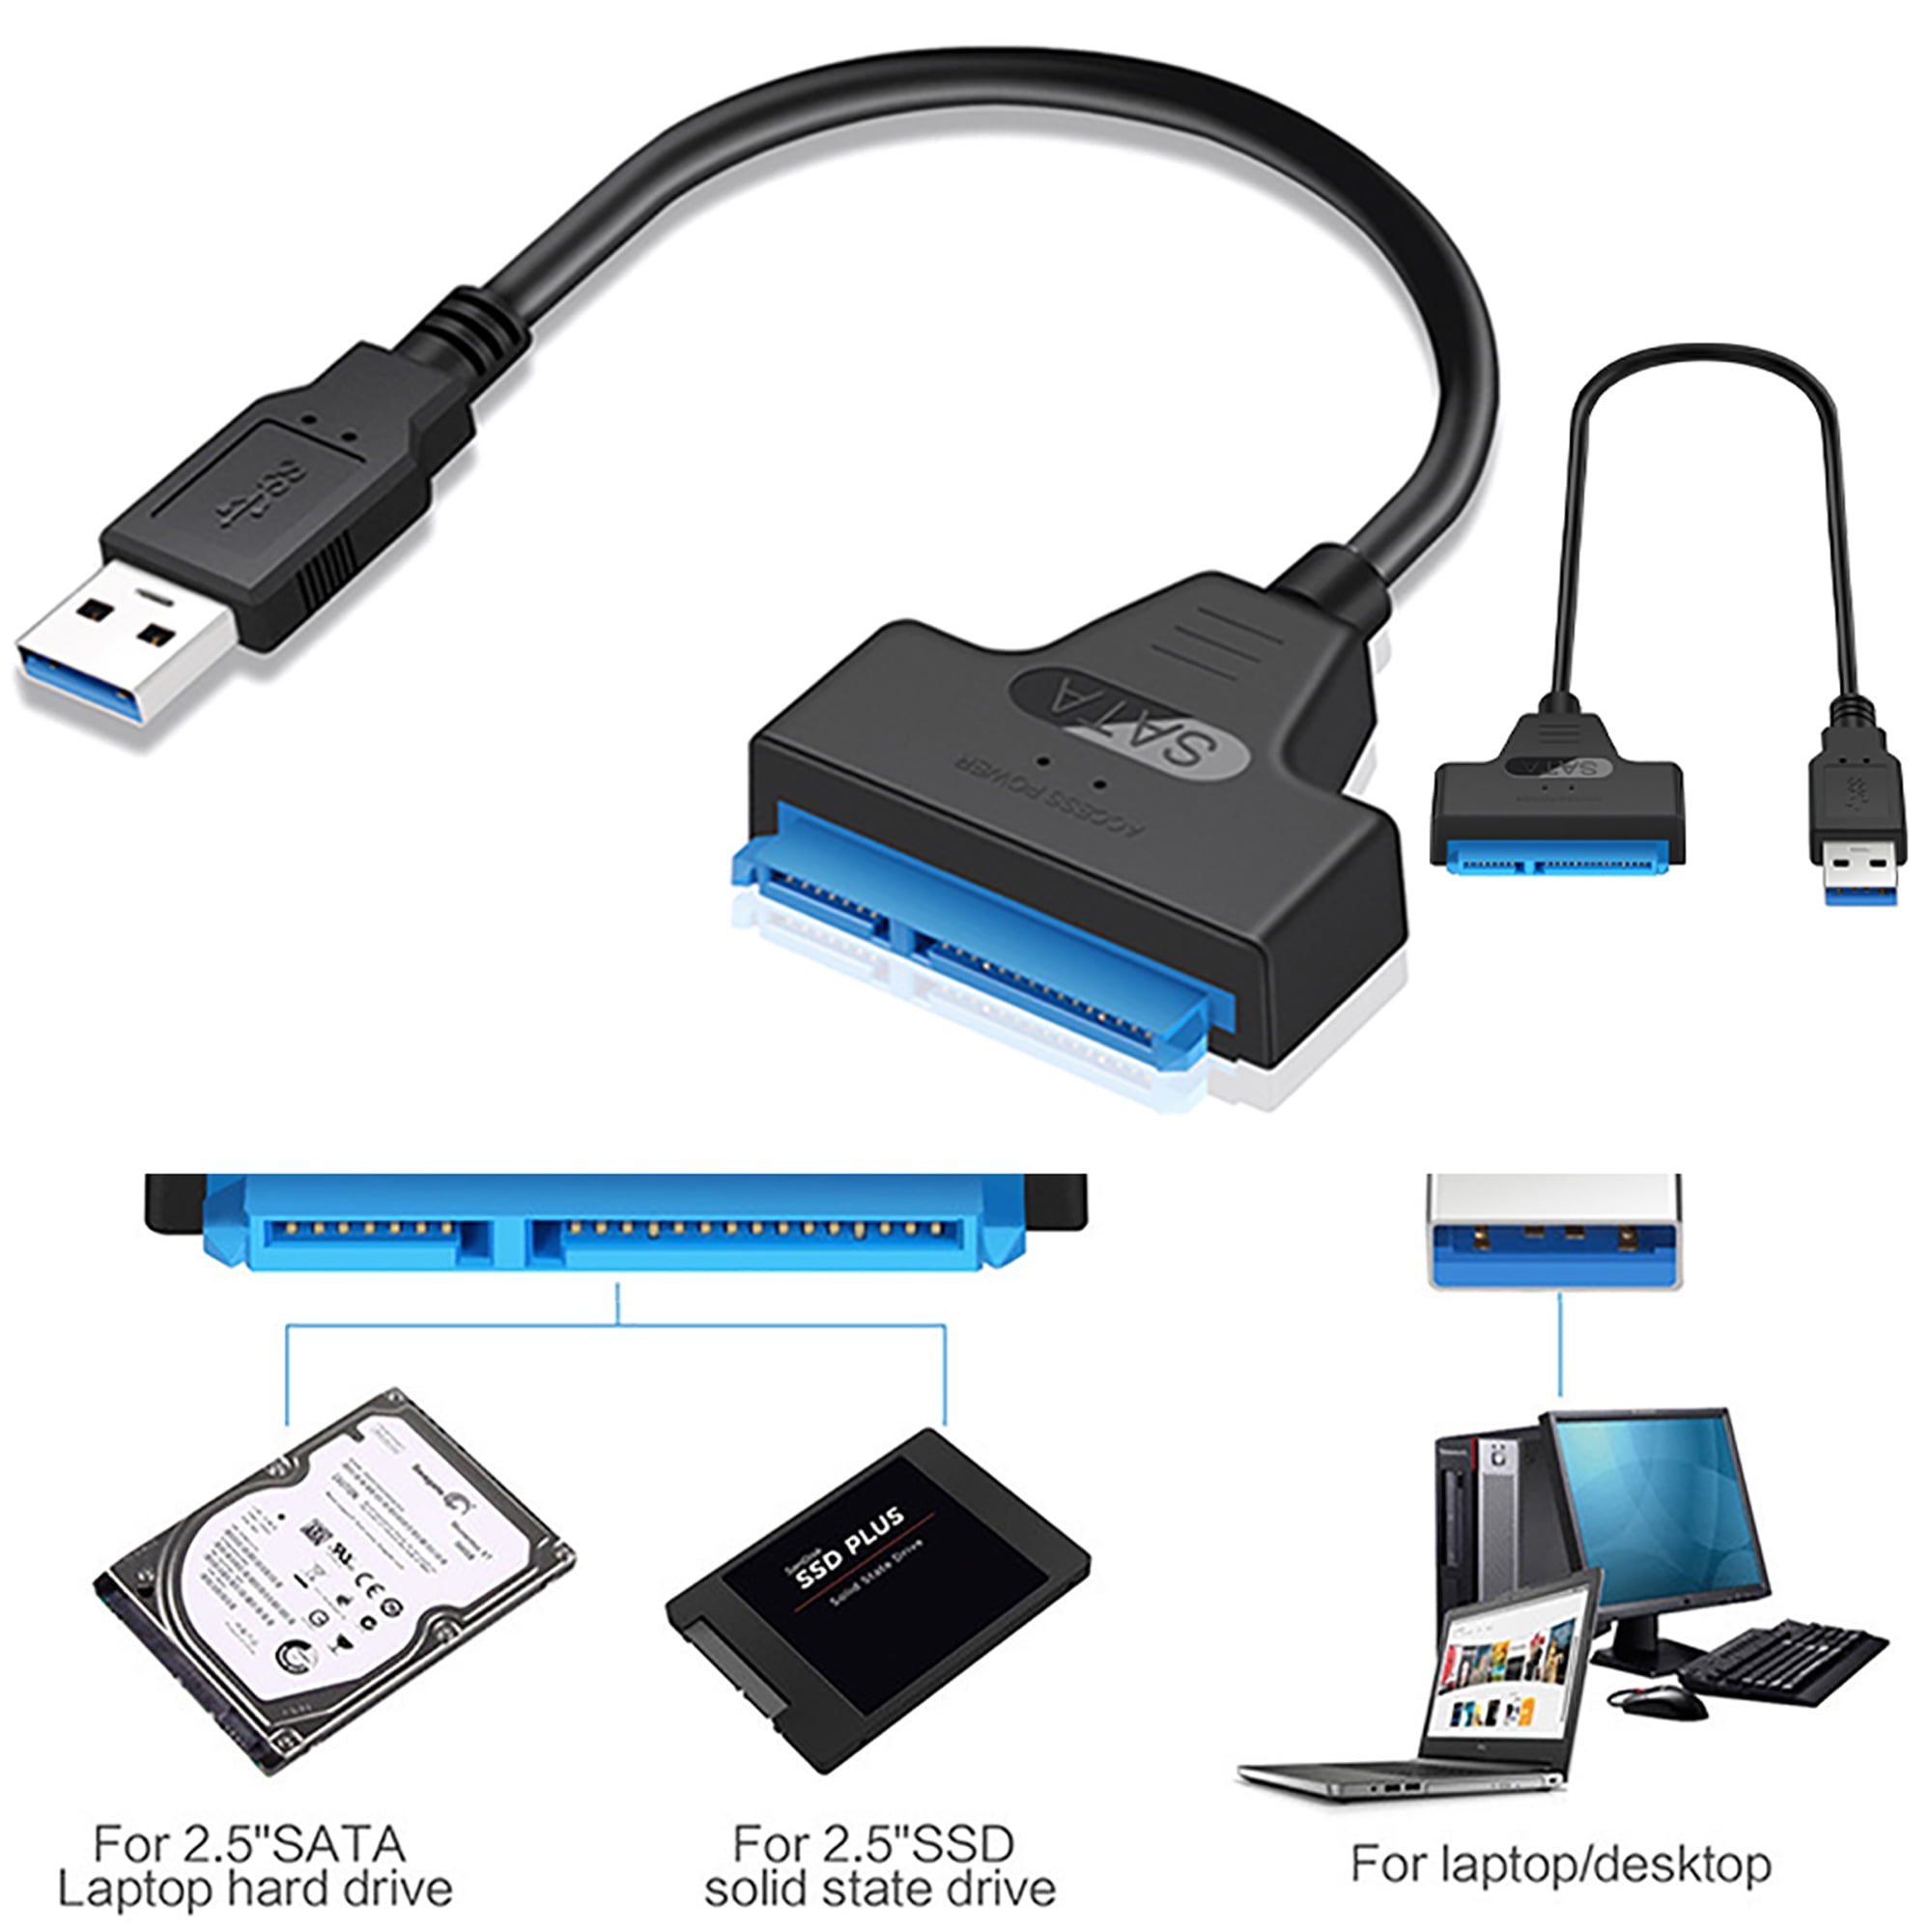 filosofisk krabbe udpege USB 3.0 SATA 2 Hard 22 Pins Disk Drive SSD HDD Adapter Connector Cable Lead  - Walmart.com